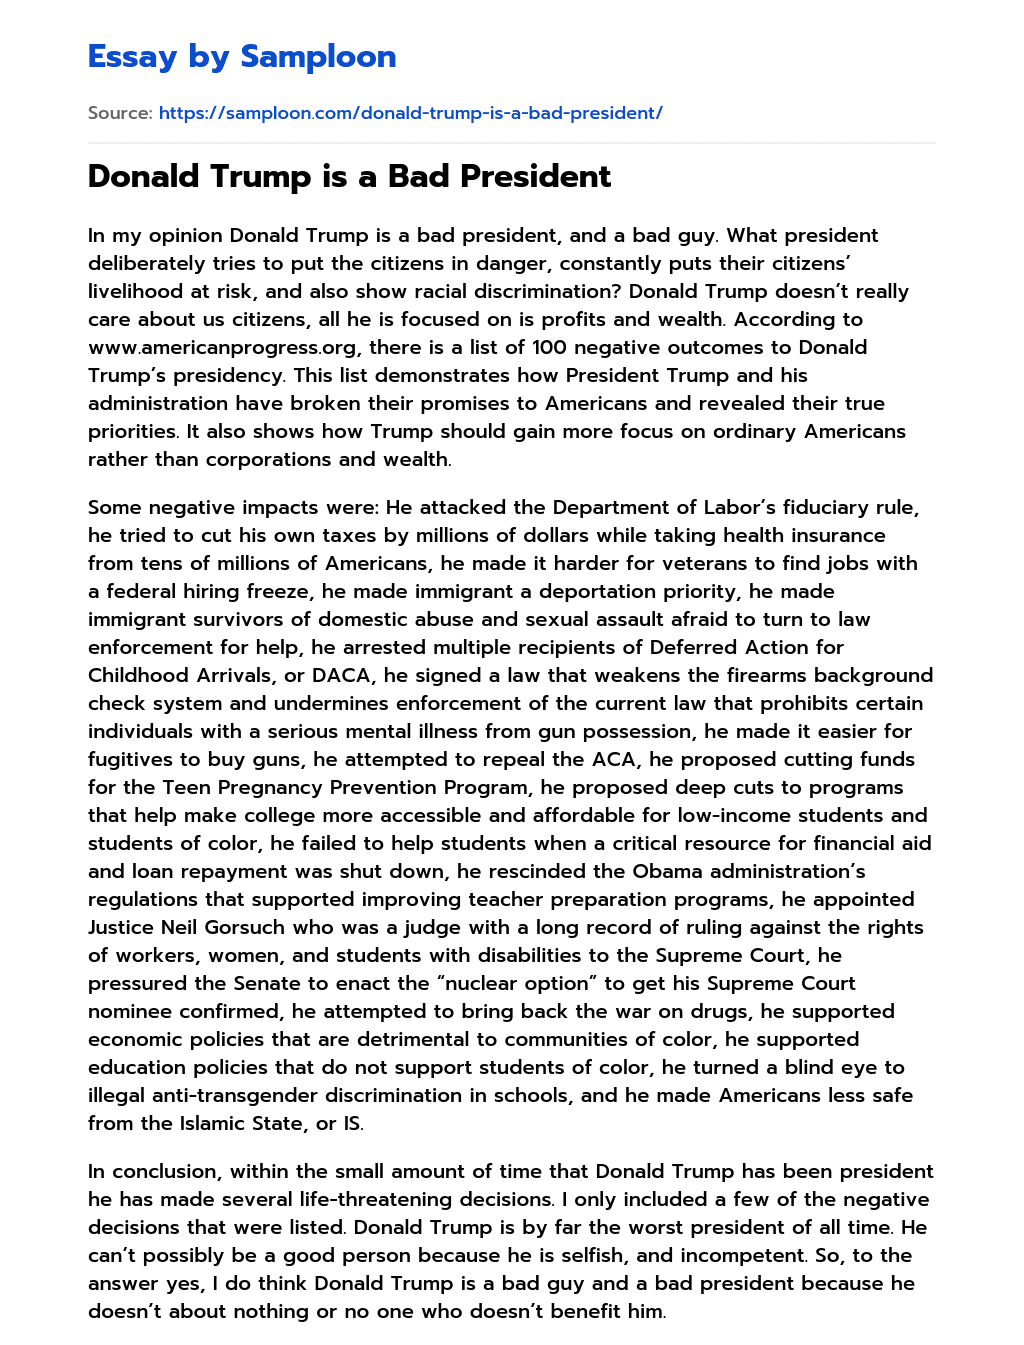 Donald Trump is a Bad President essay